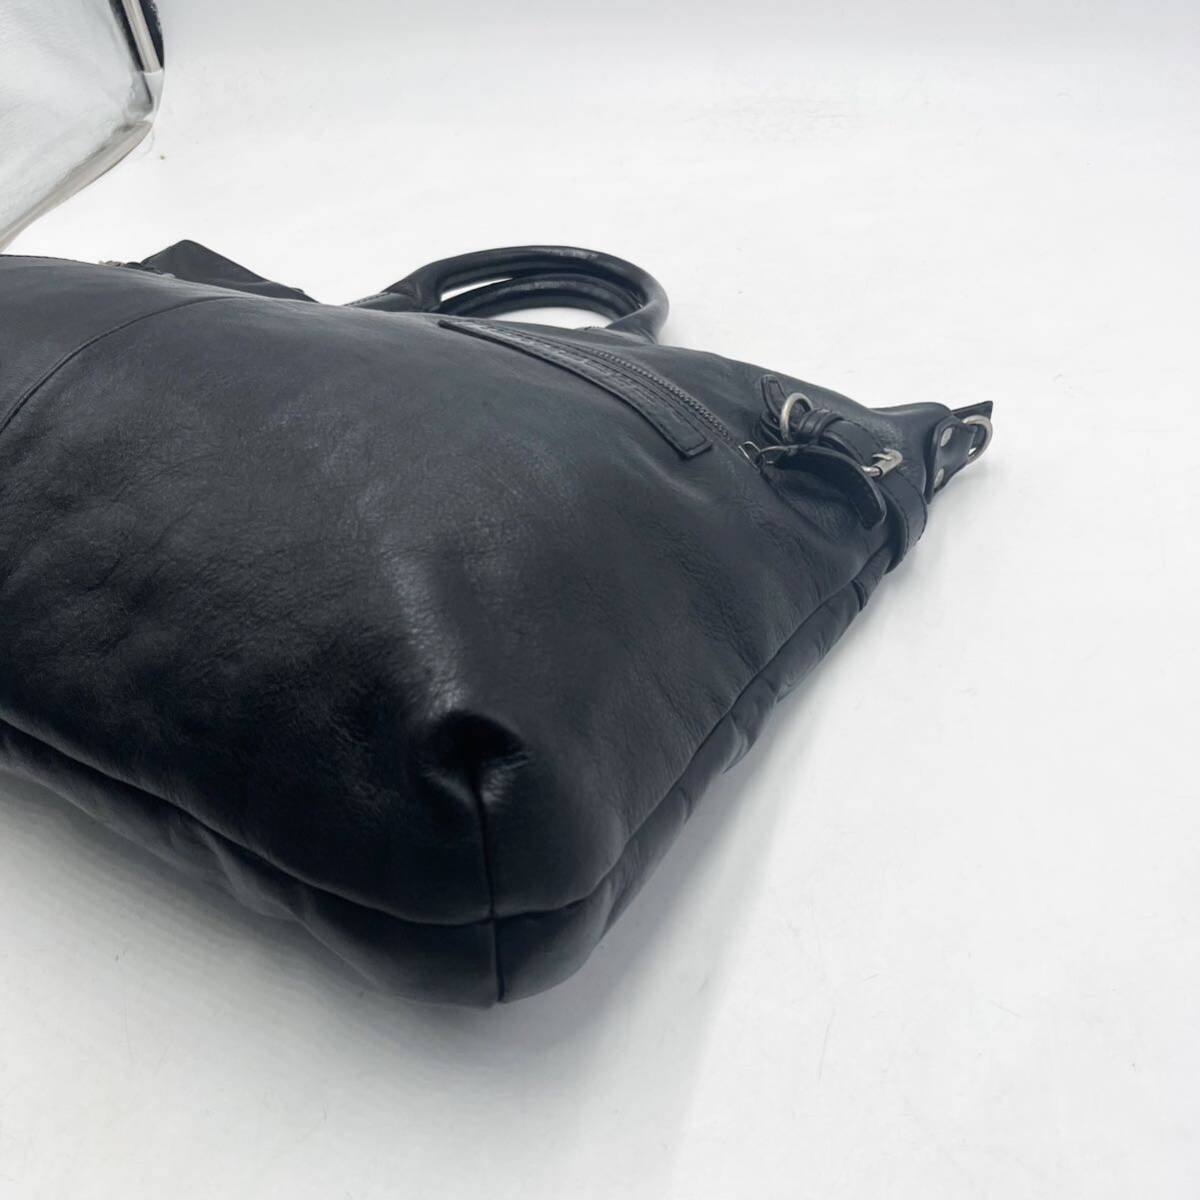 1 jpy [ beautiful goods ] tote bag business bag briefcase shoulder bag leather leather black black men's lady's 